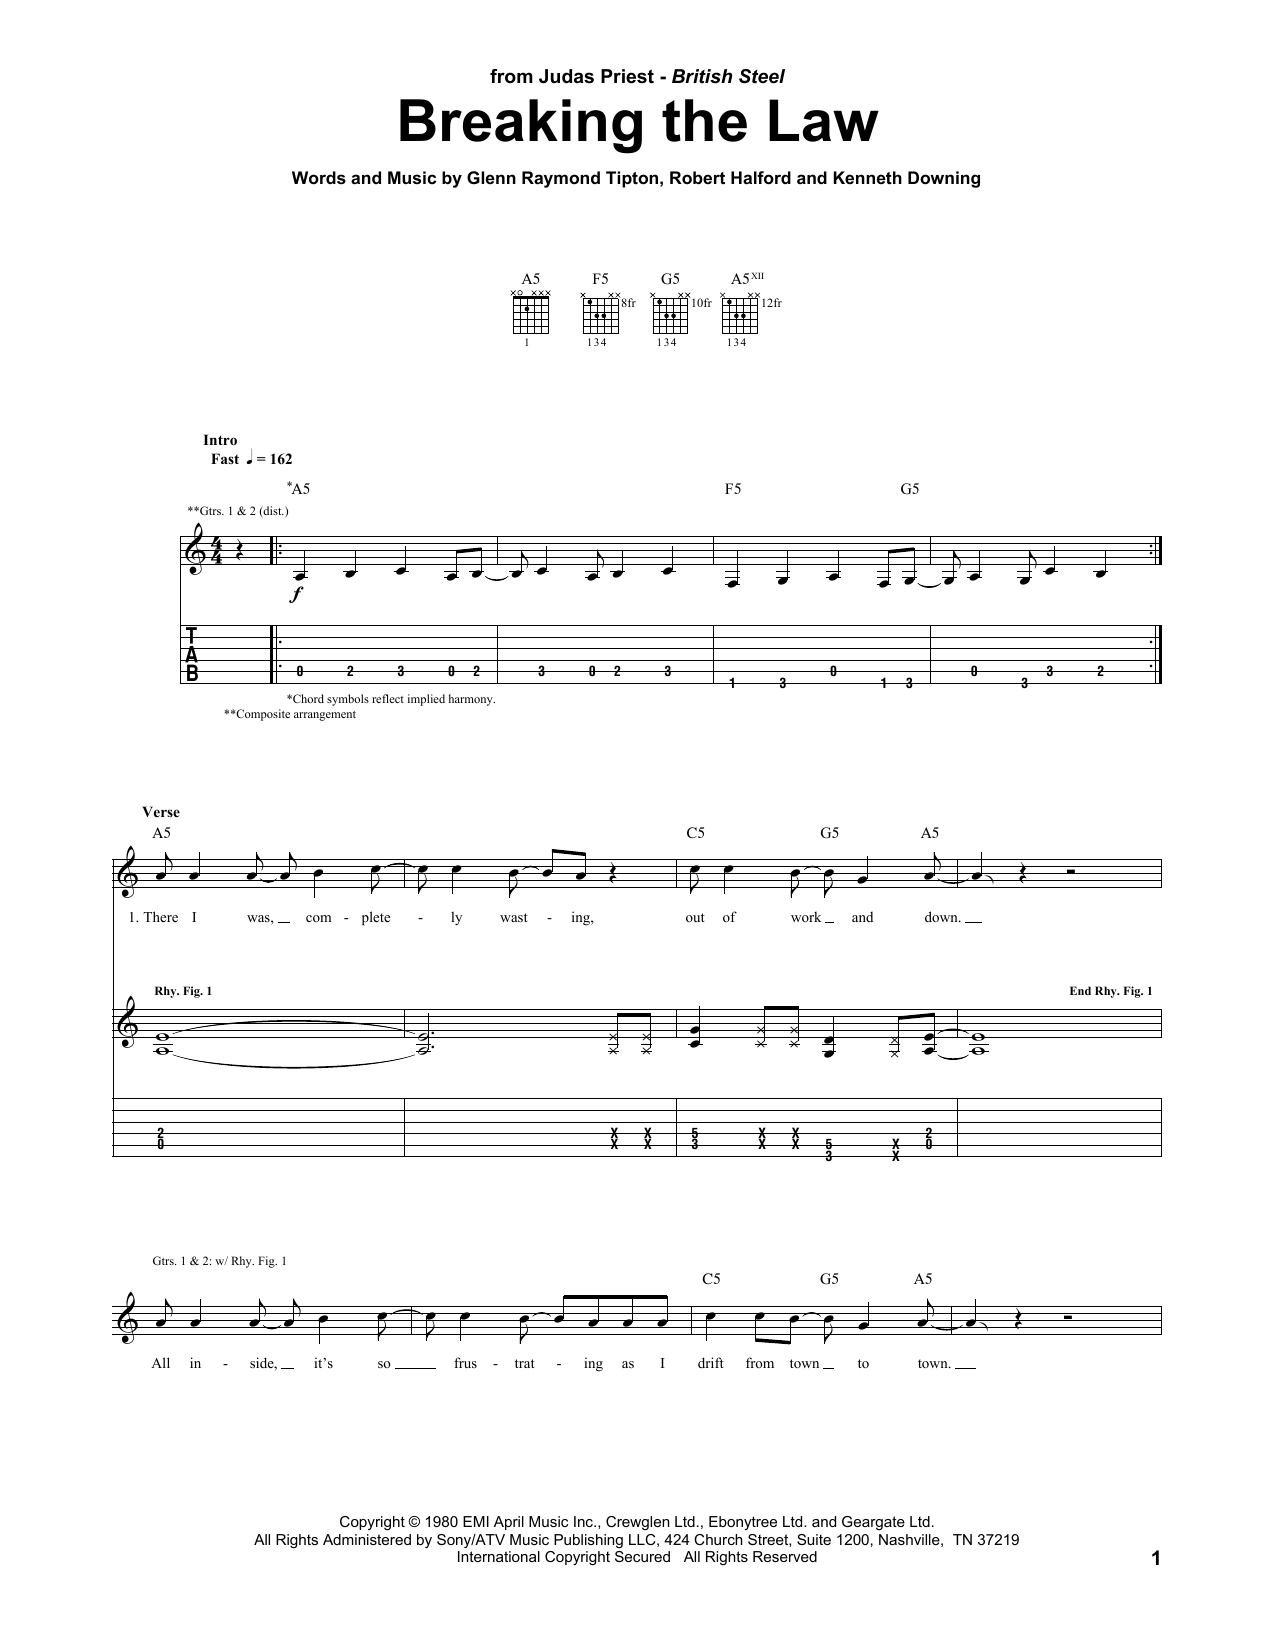 Judas Priest Breaking The Law Sheet Music Notes Download Printable Pdf Score 164447